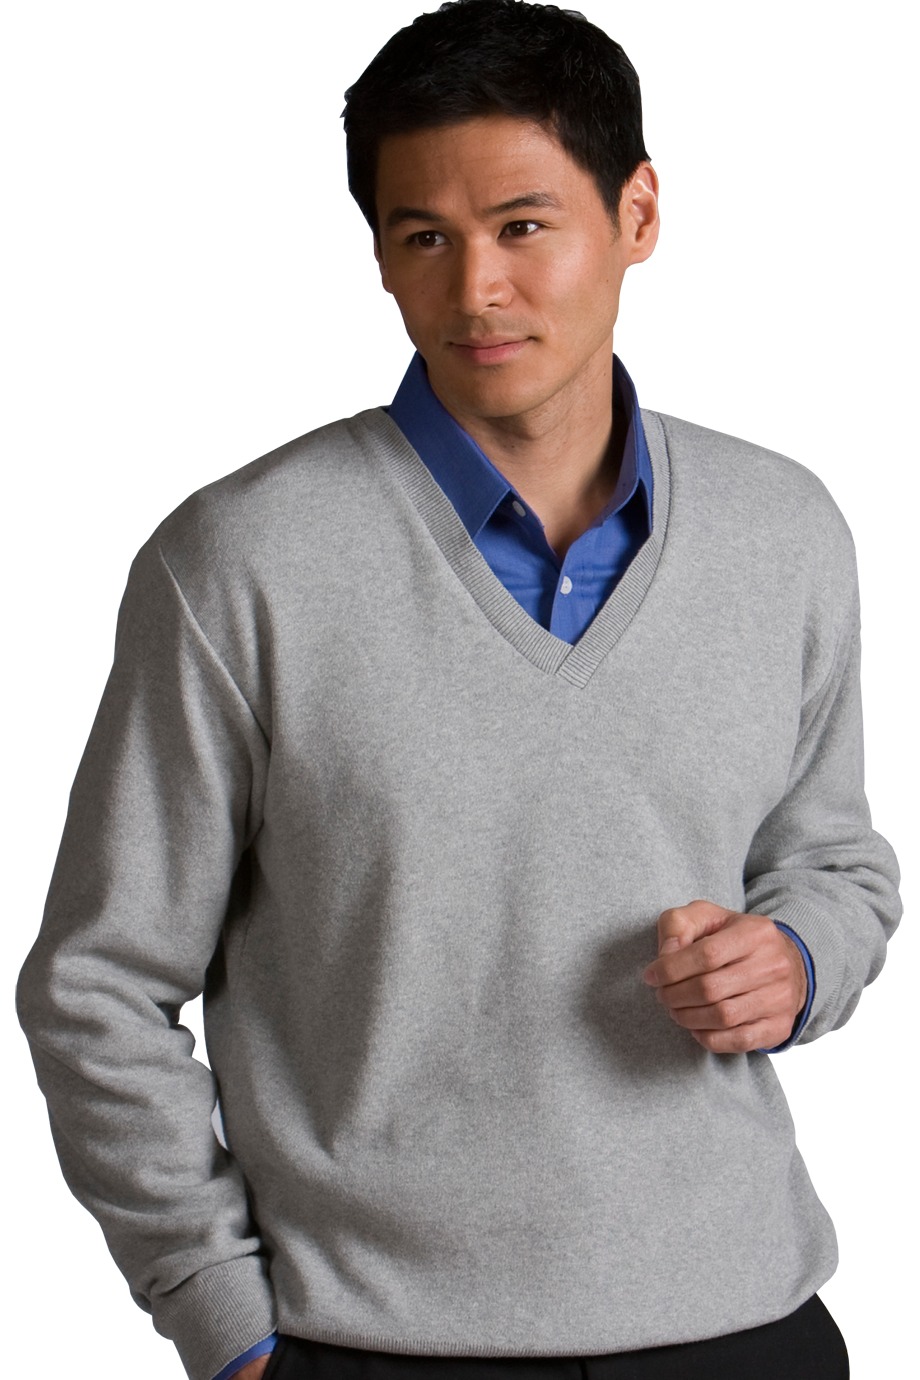 Edwards Garment 700 - Men's Cotton Cashmere V-Neck Sweater $23.98 ...